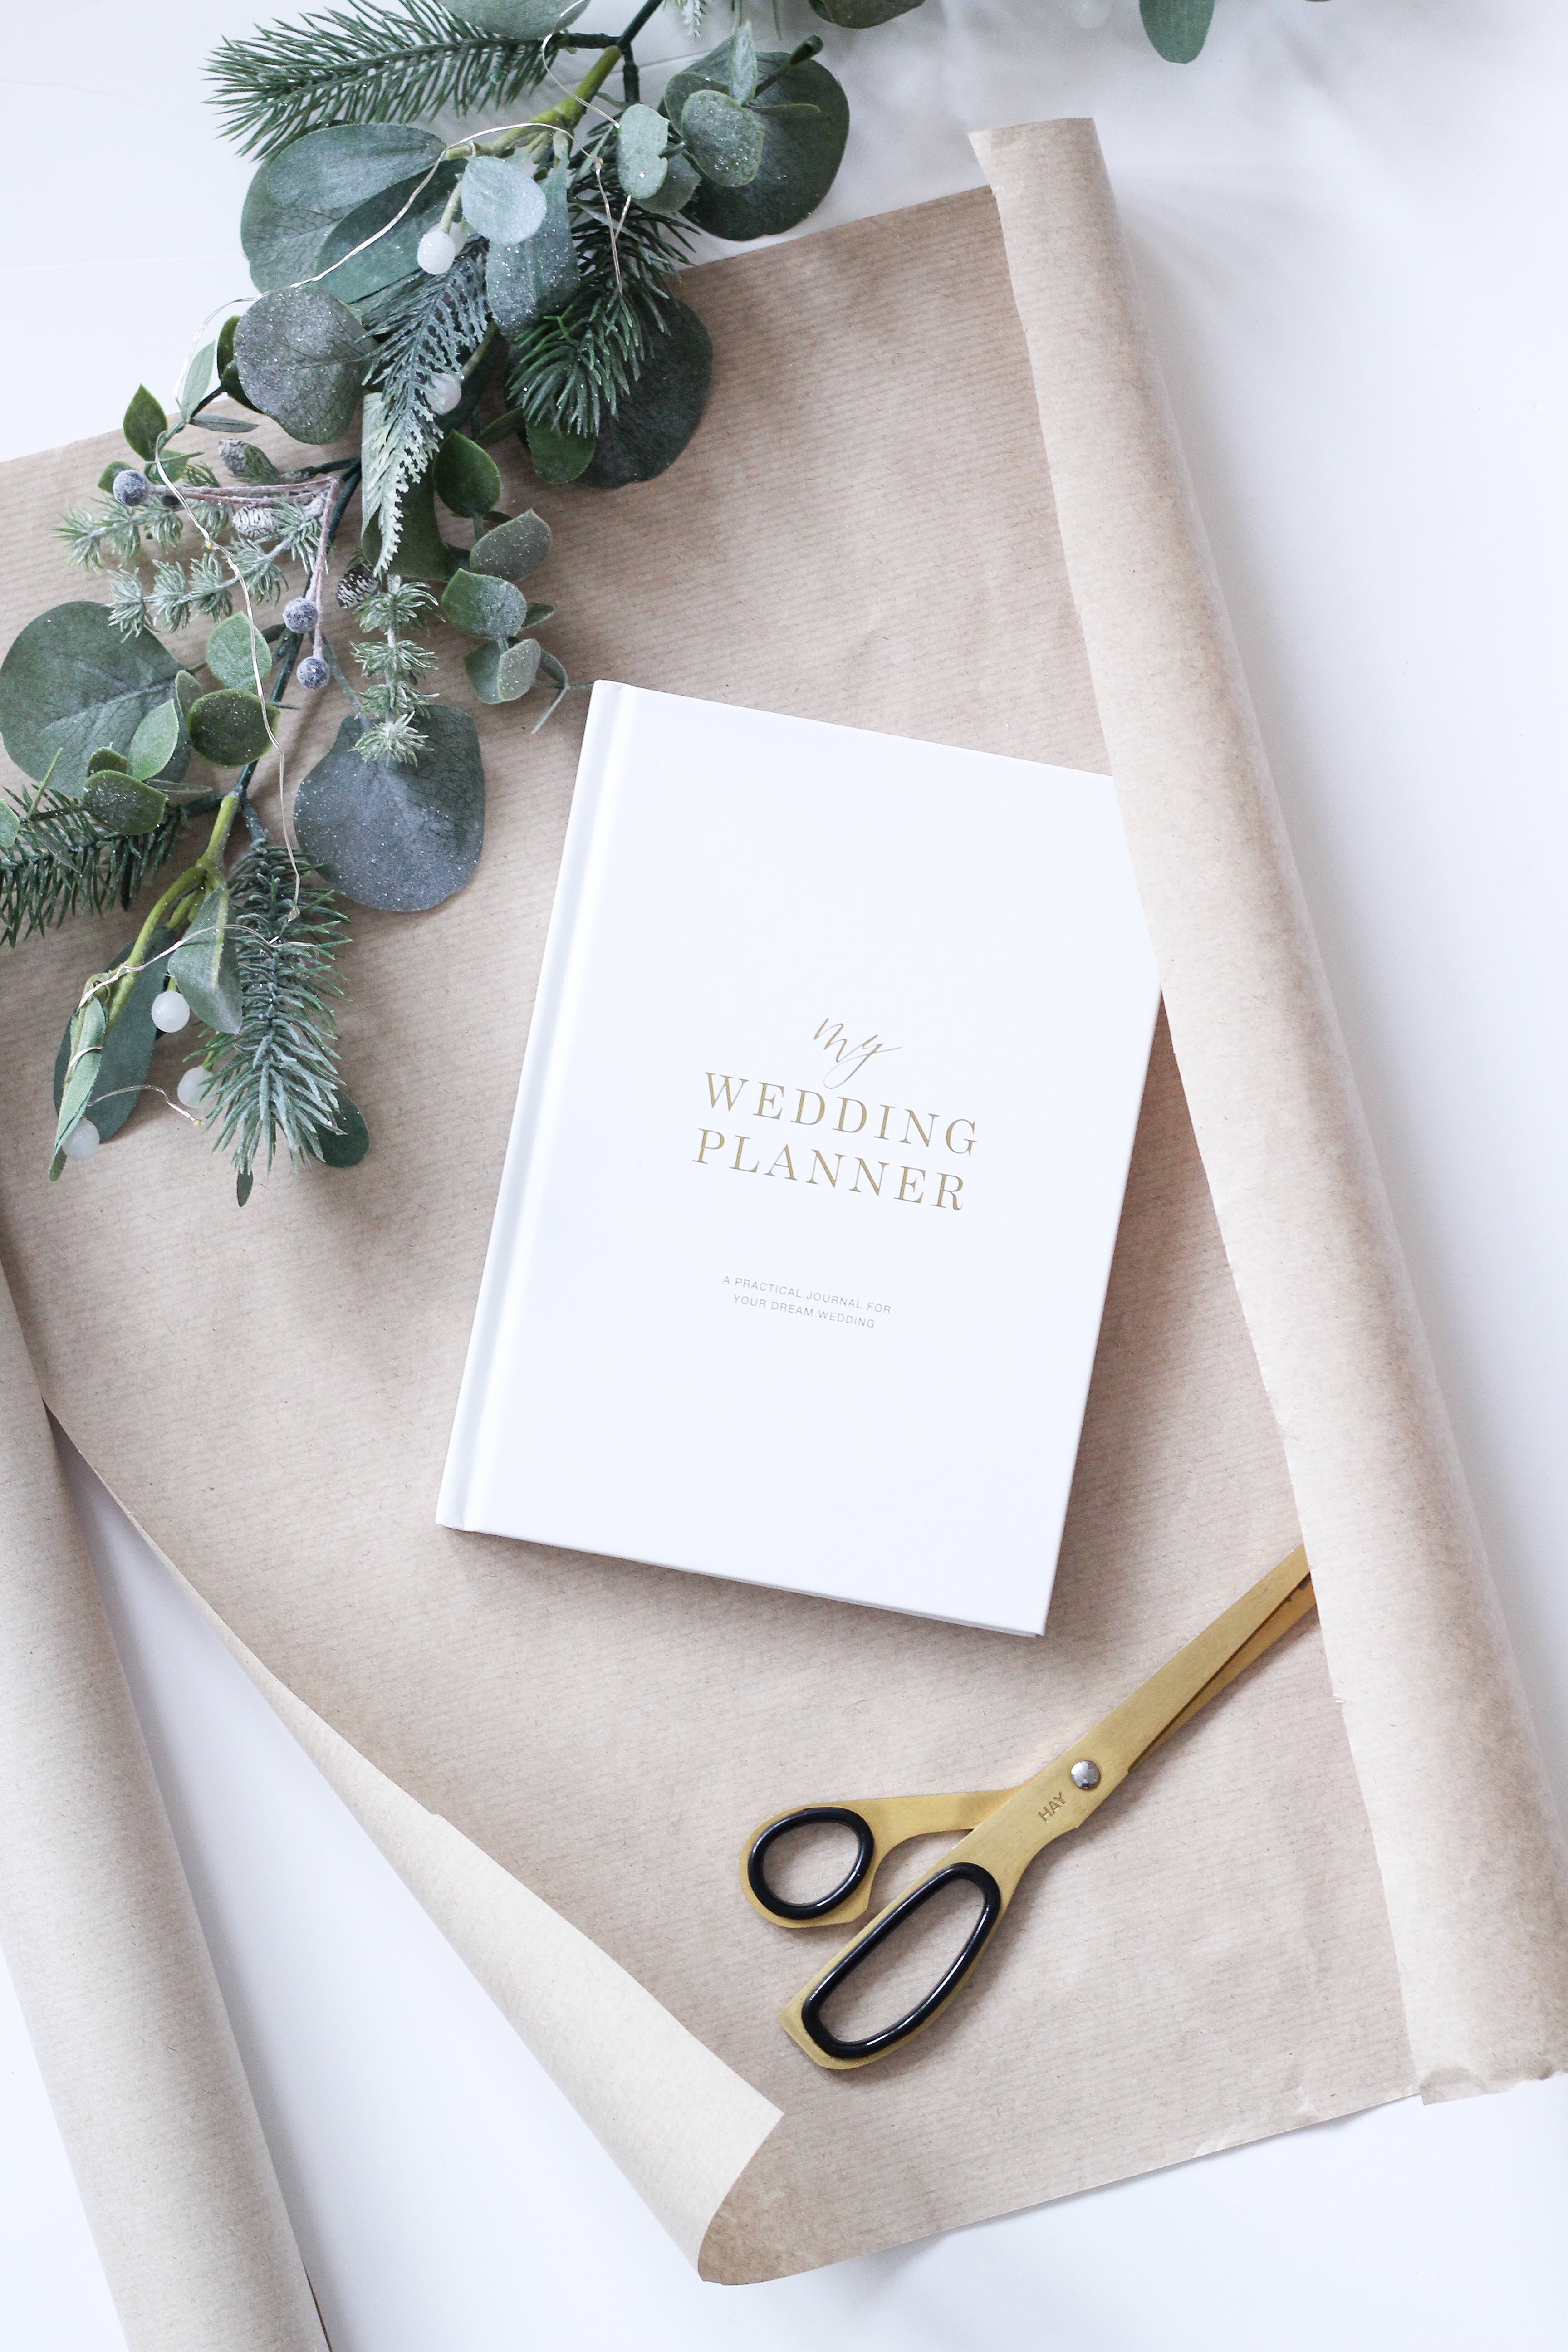 Wedding planner book, Wedding Organiser, Wedding Journal